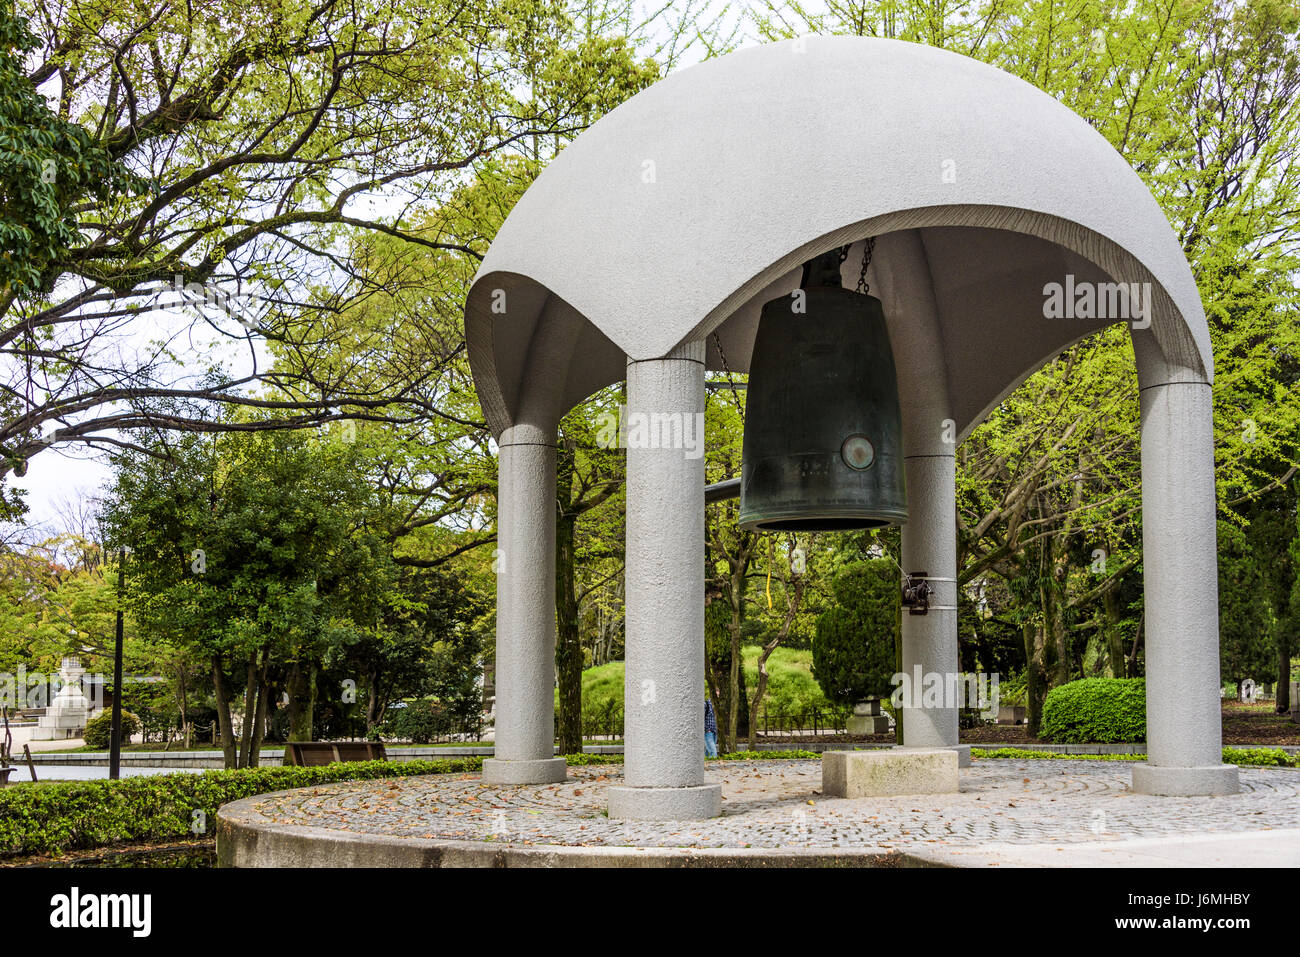 Mémorial de la paix de Bell WW2 bombe atomique Hiroshima park. Banque D'Images